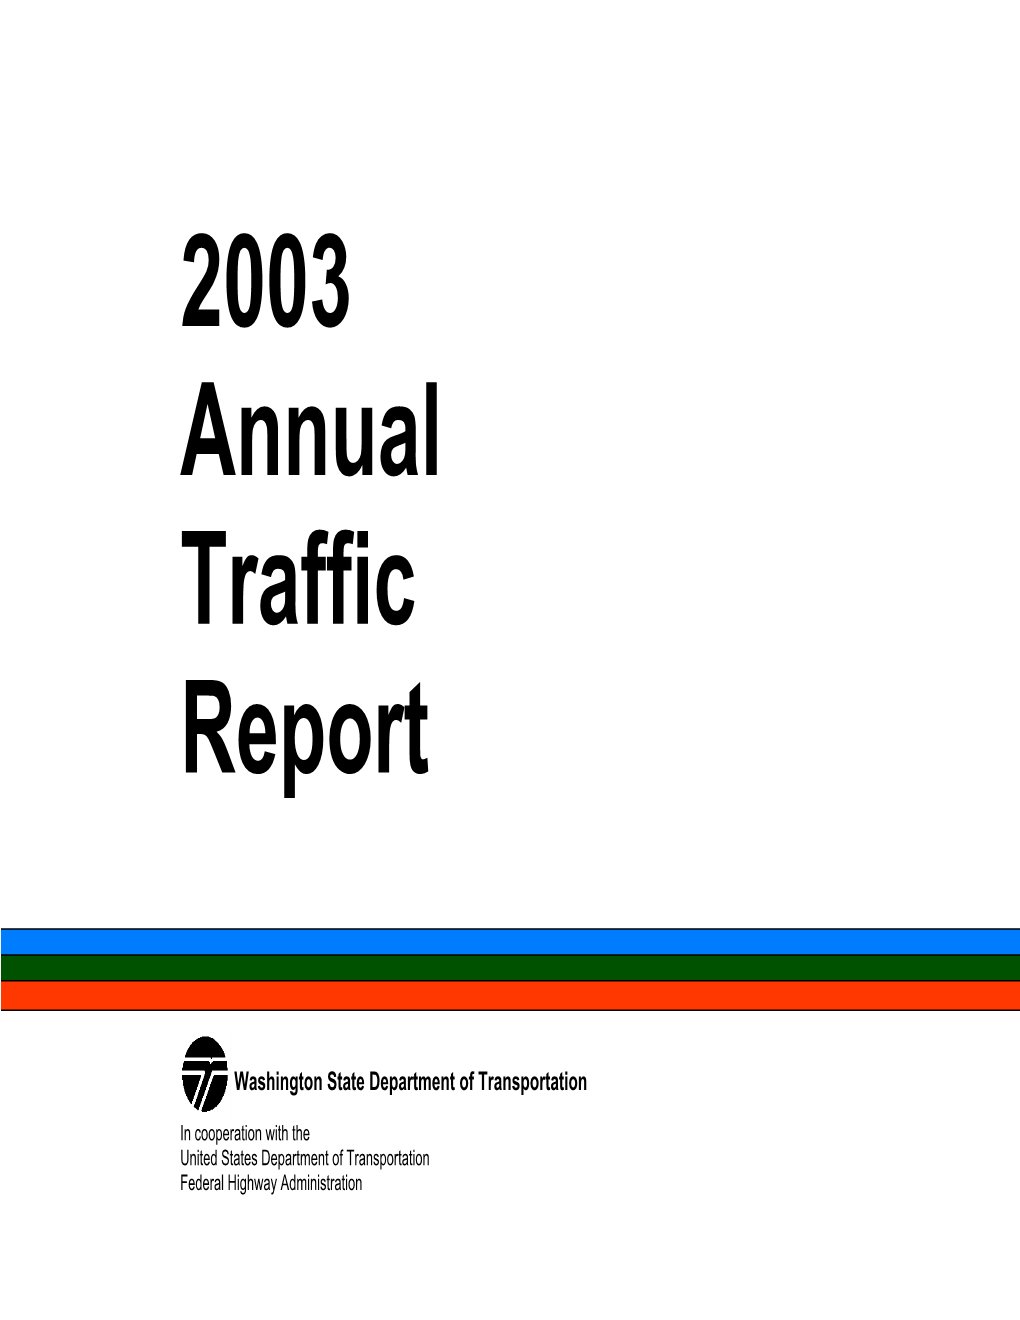 Annual Traffic Report 2003